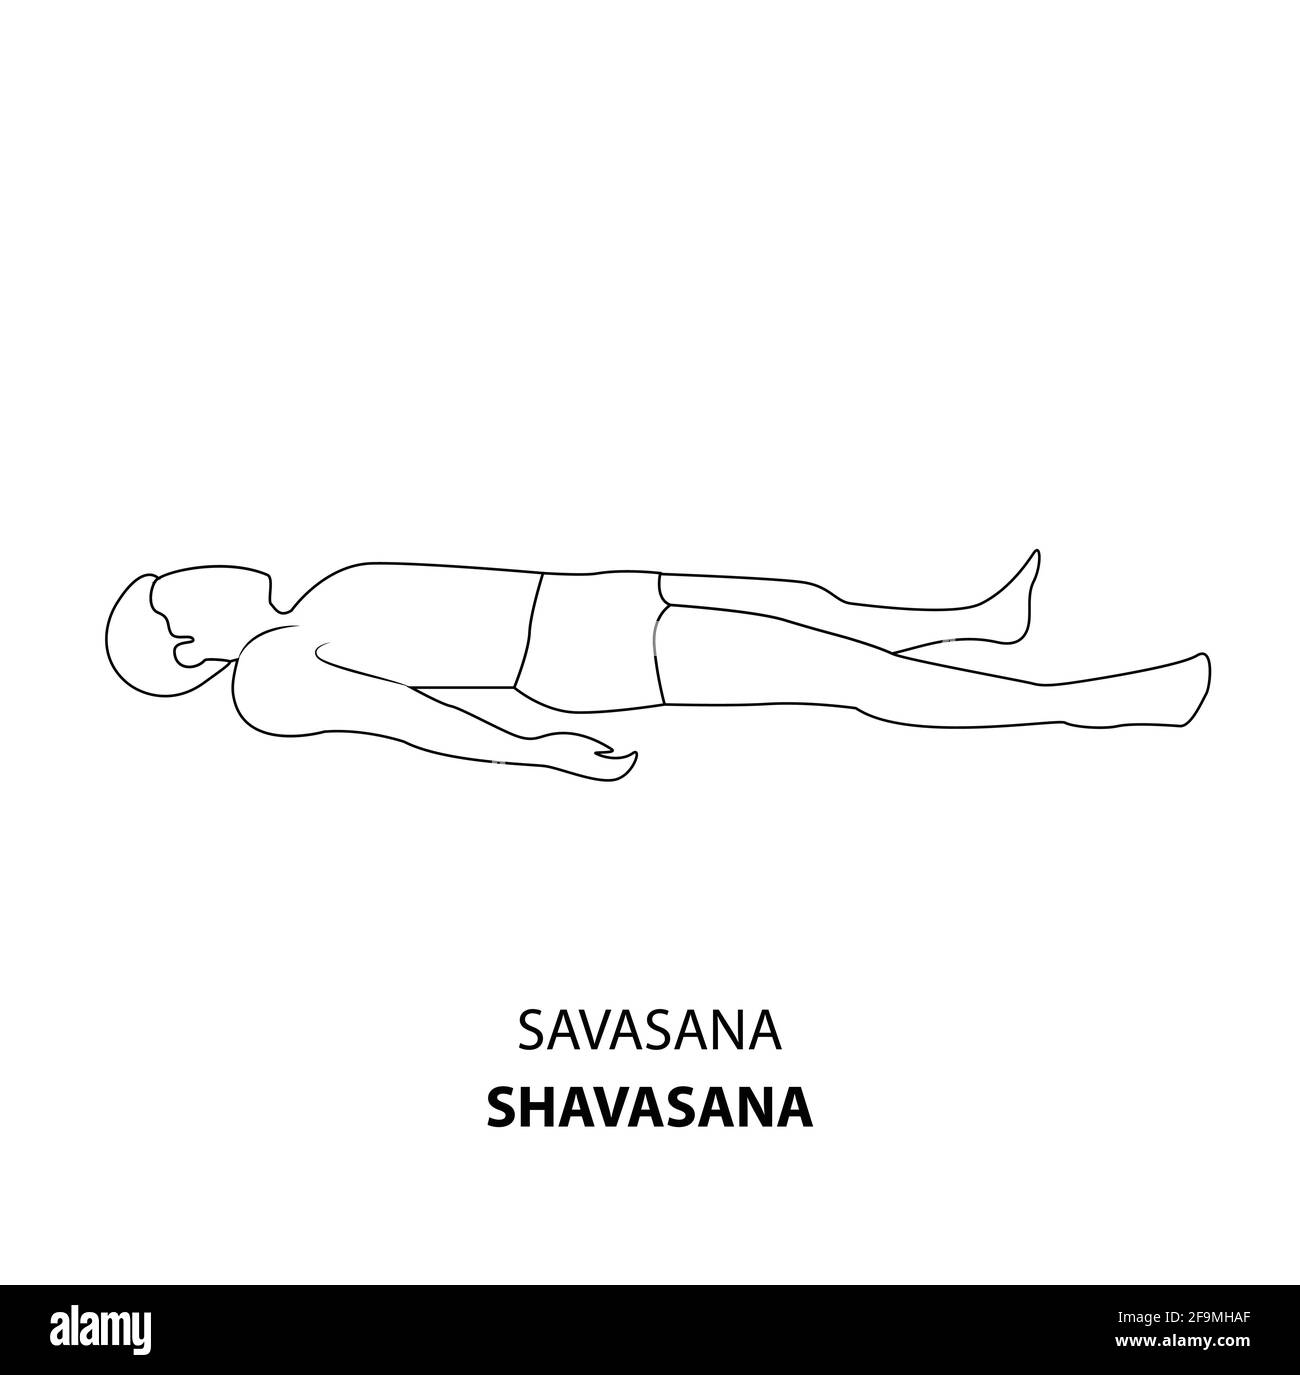 Man practicing yoga pose isolated outline Illustration. Man lying on the ground in Shavasana Corpse Pose or Mrtasana, Yoga Asana line icon Stock Vector